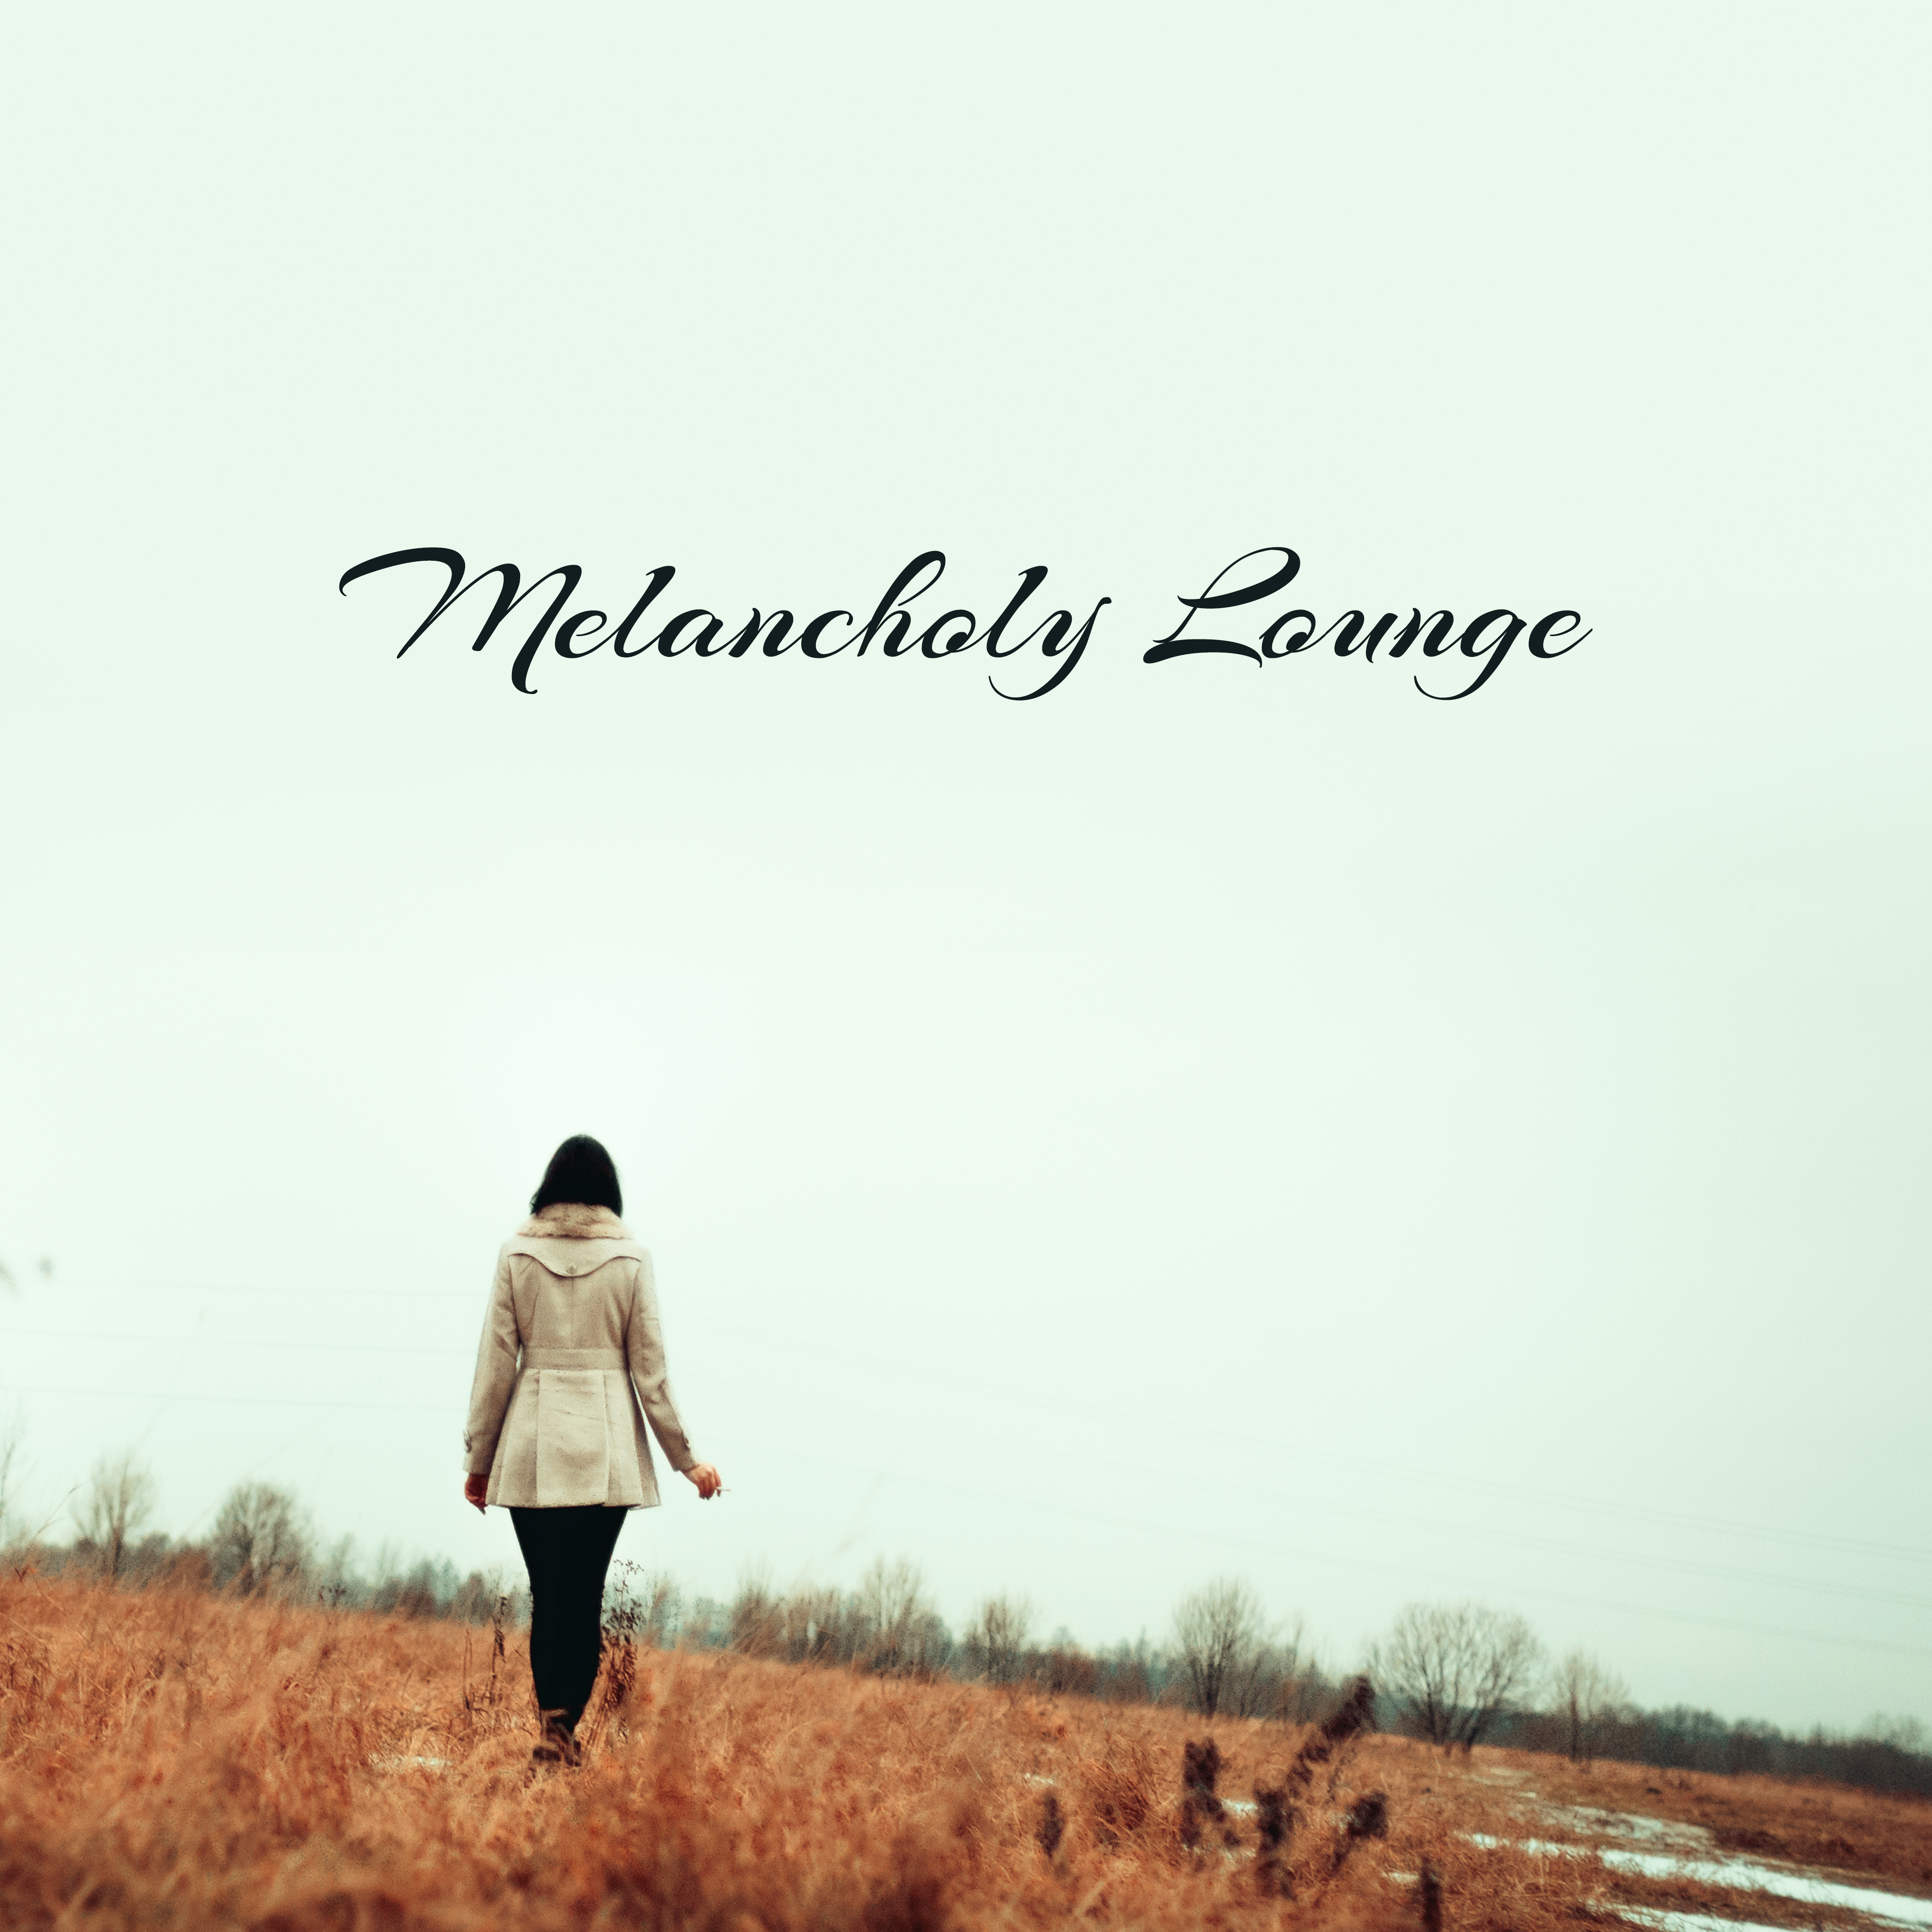 Melancholy Lounge